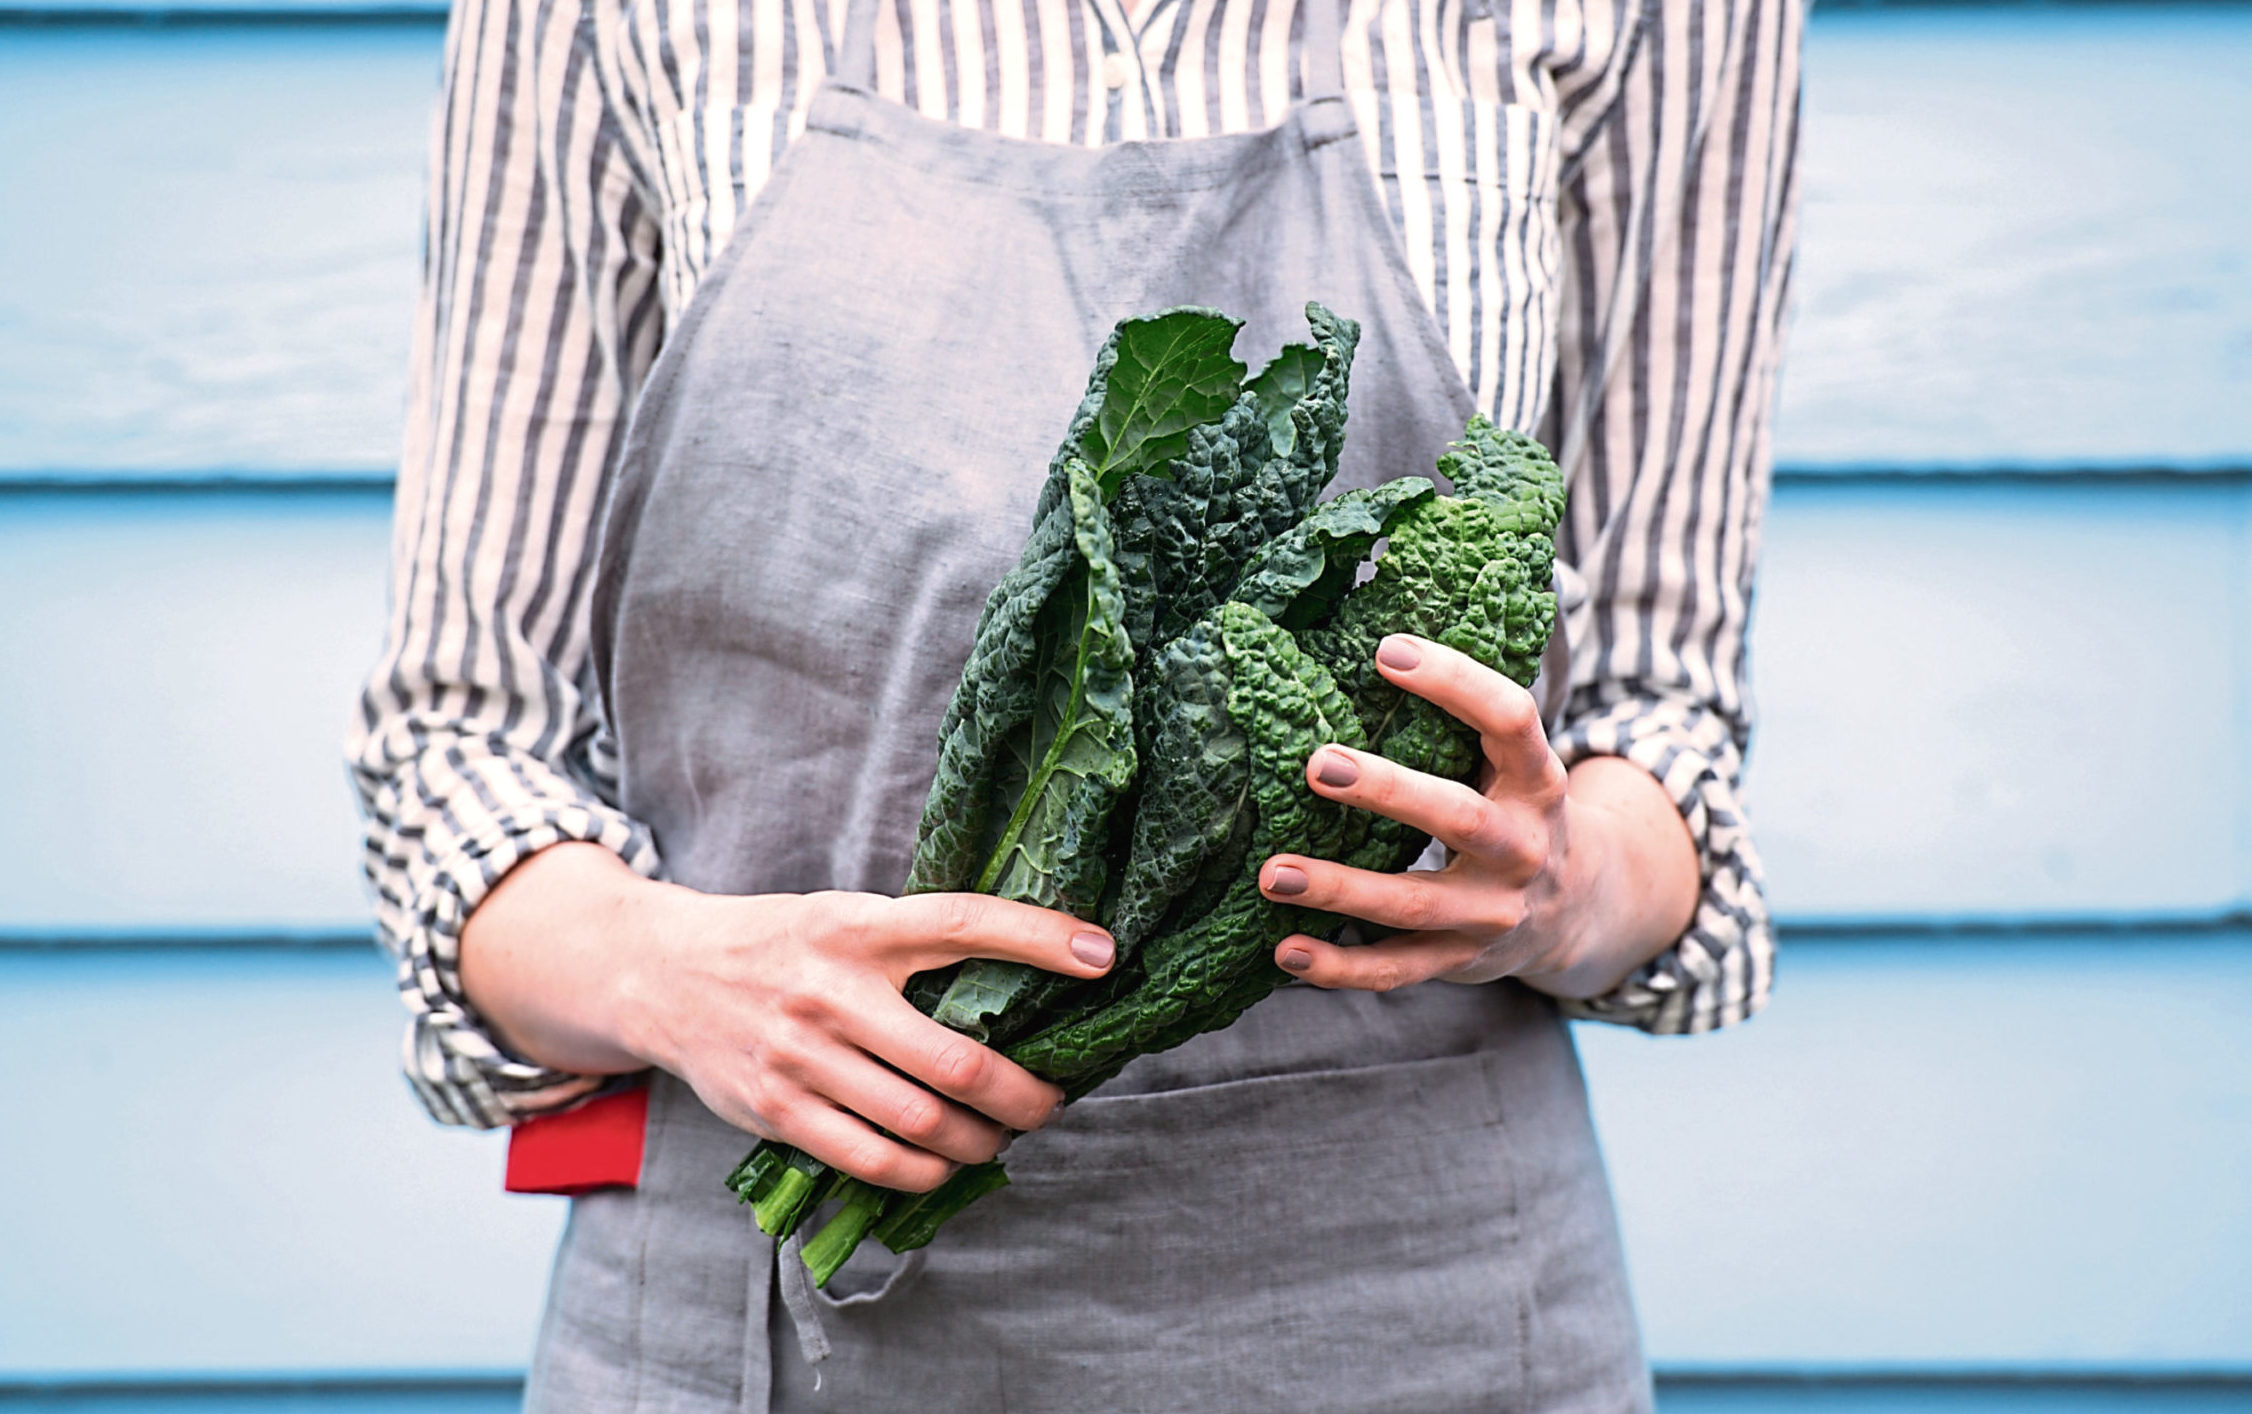 Tasty, trendy kale has made a big comeback